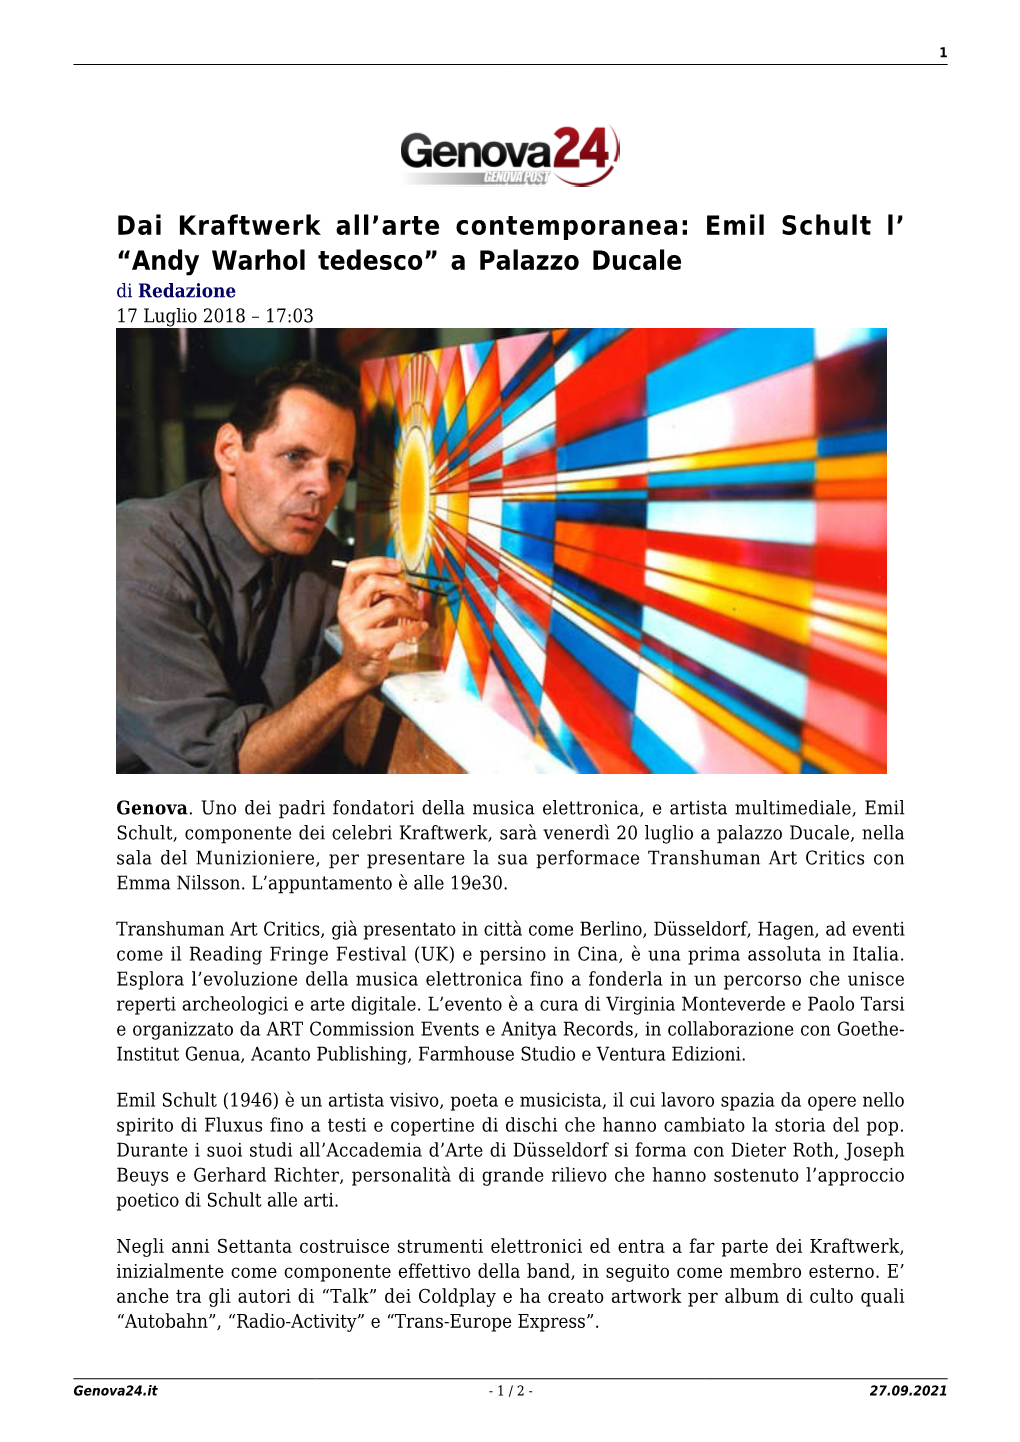 Dai Kraftwerk All'arte Contemporanea: Emil Schult L' “Andy Warhol Tedesco” a Palazzo Ducale